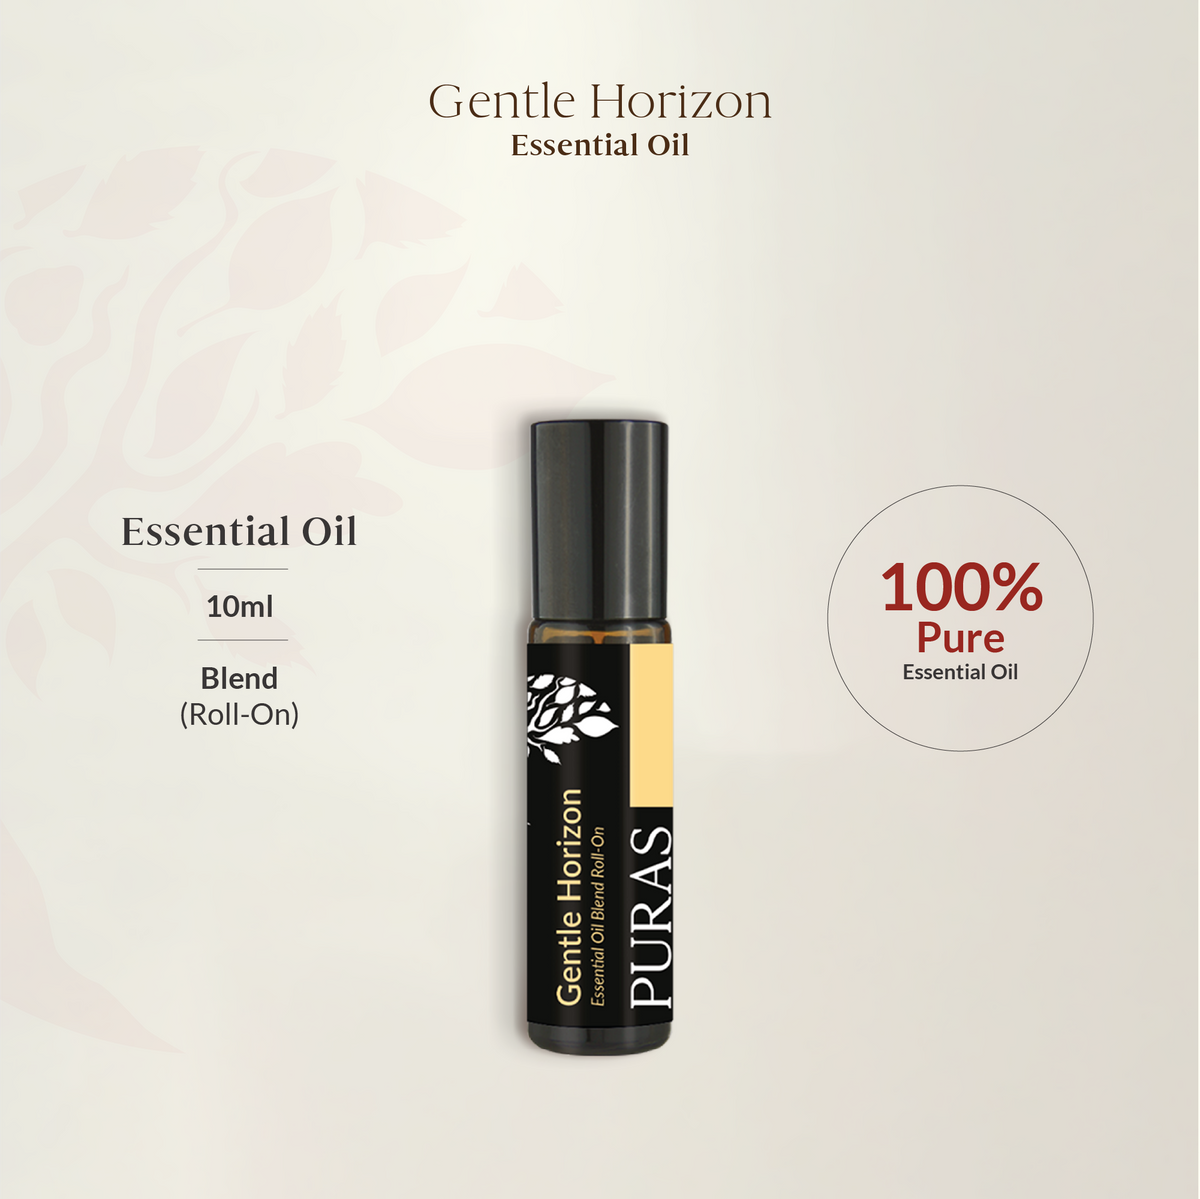 Gentle Horizon Essential Oil Blend (Roll-On)